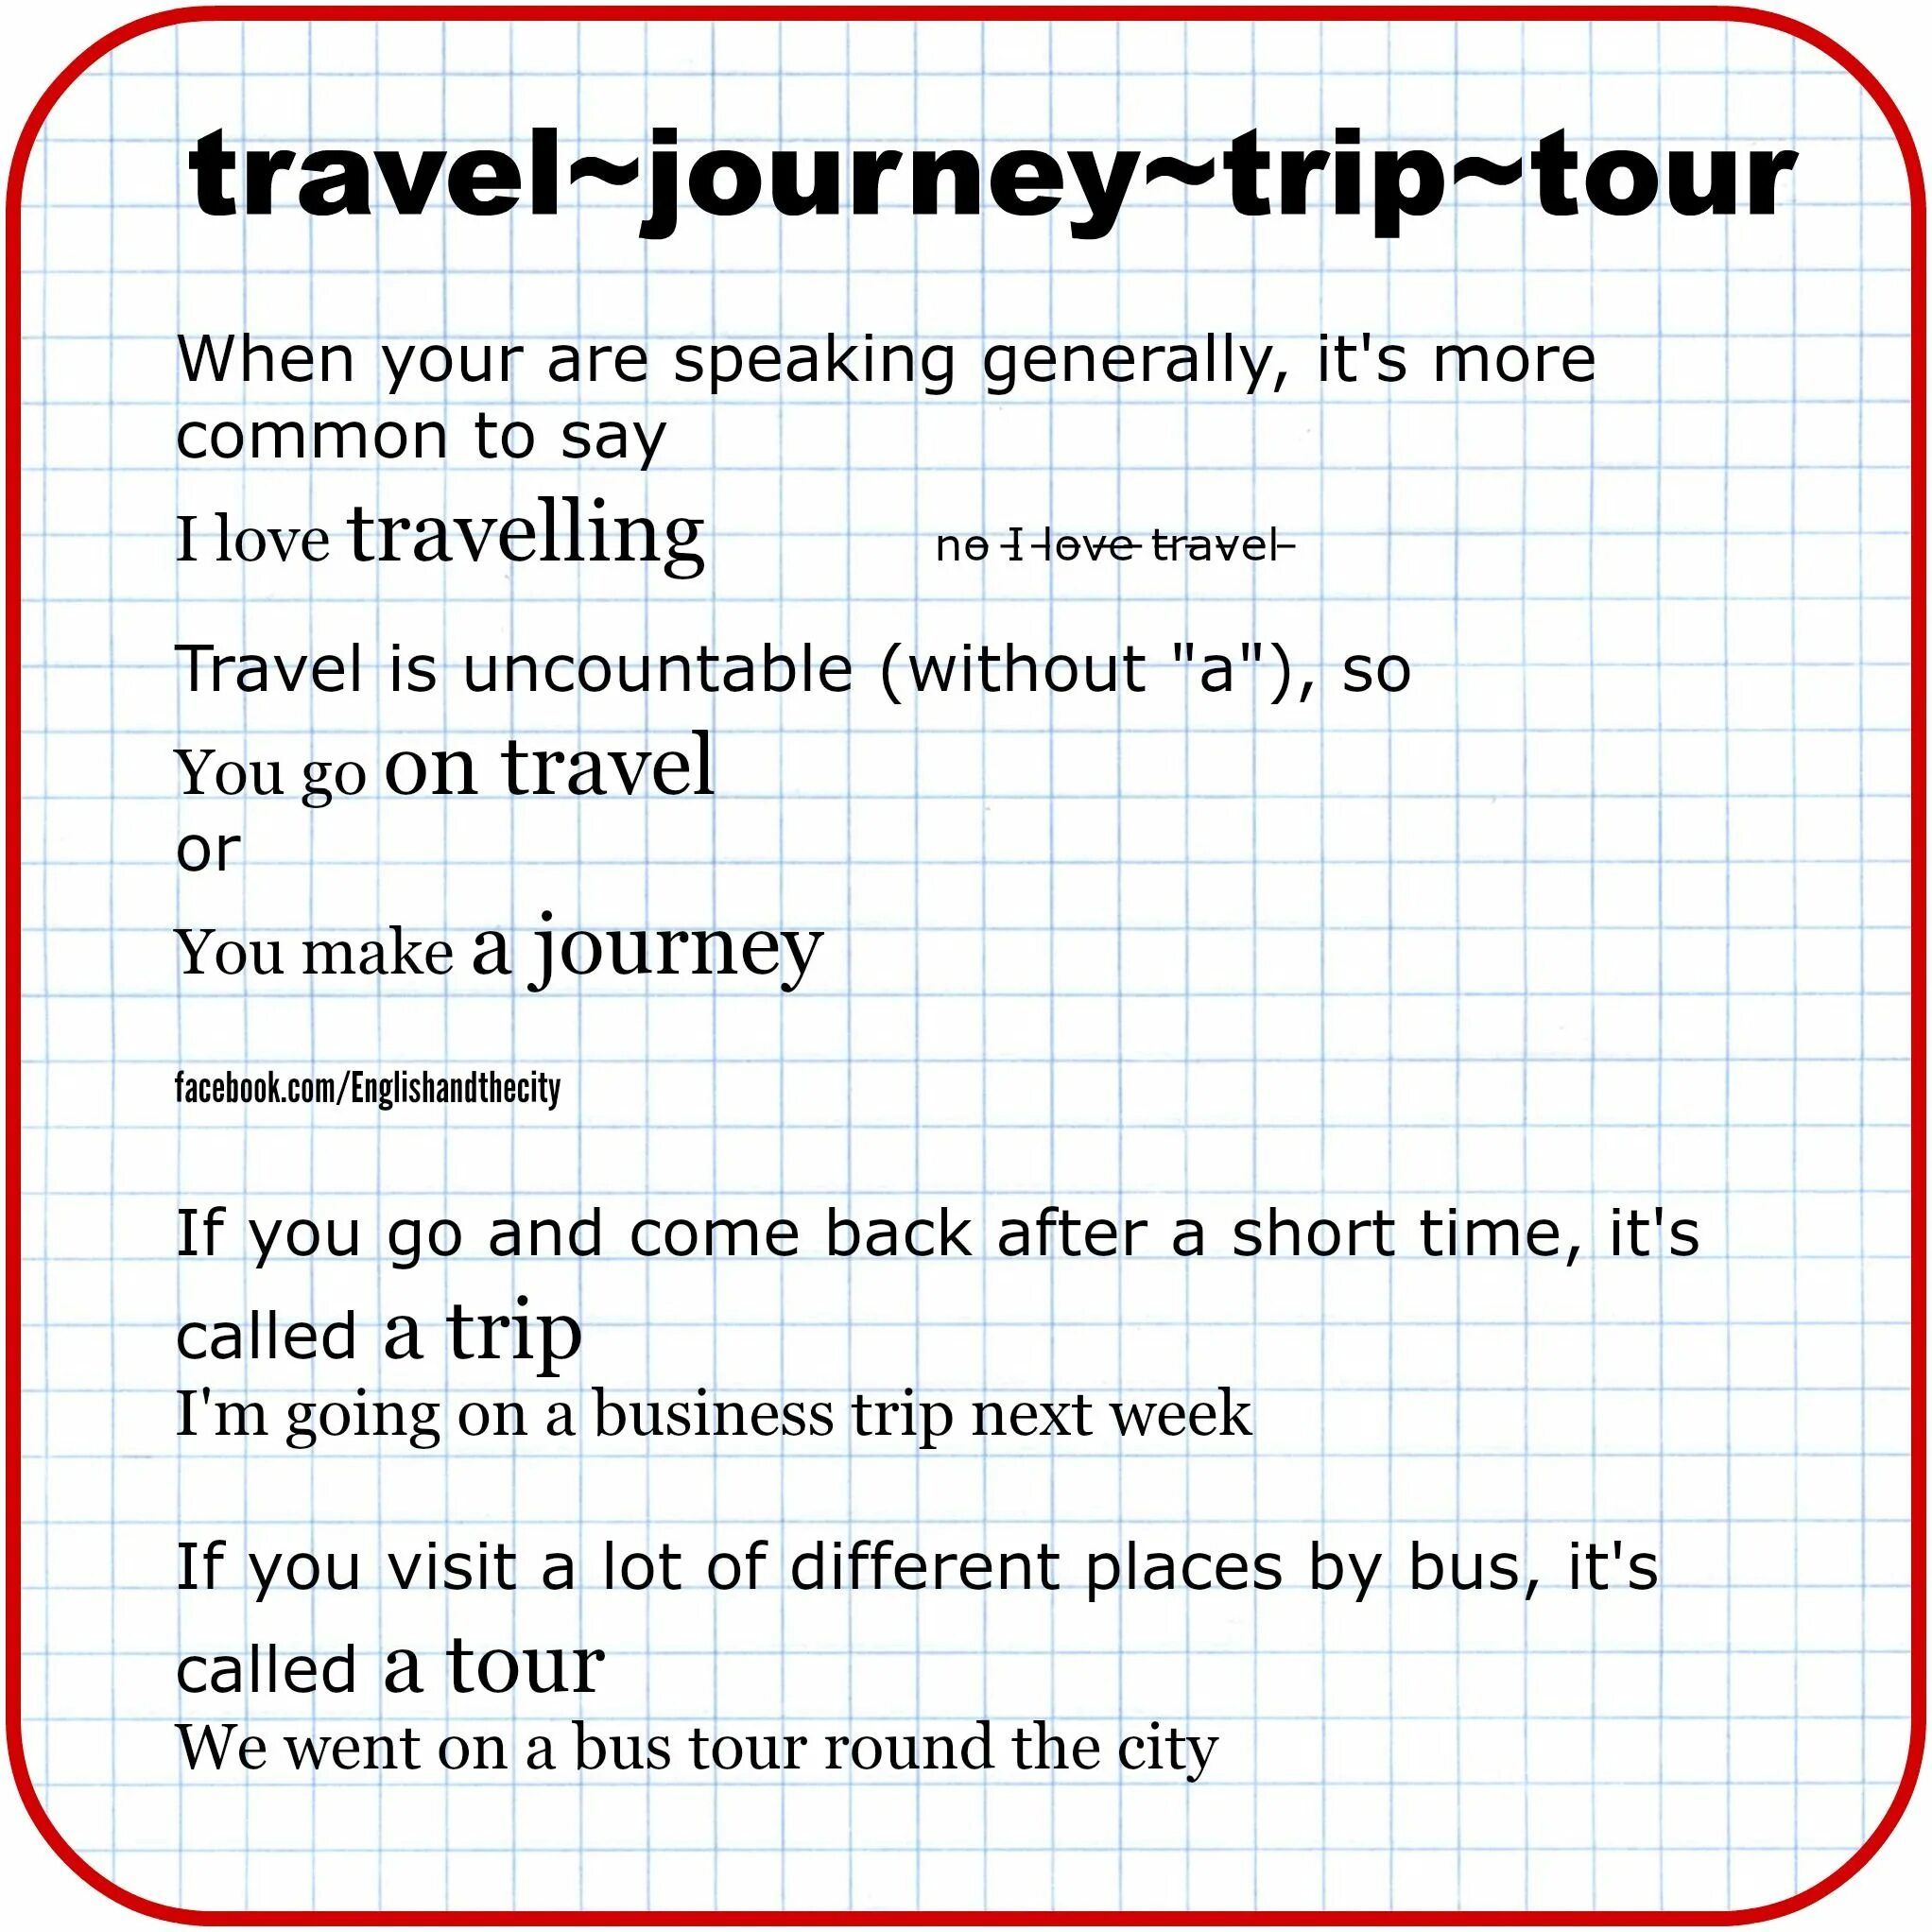 Journey trip Travel Tour разница. Travel Journey Voyage trip Tour. Journey Travel разница. Travel Journey Voyage trip Tour разница. Tour journey разница